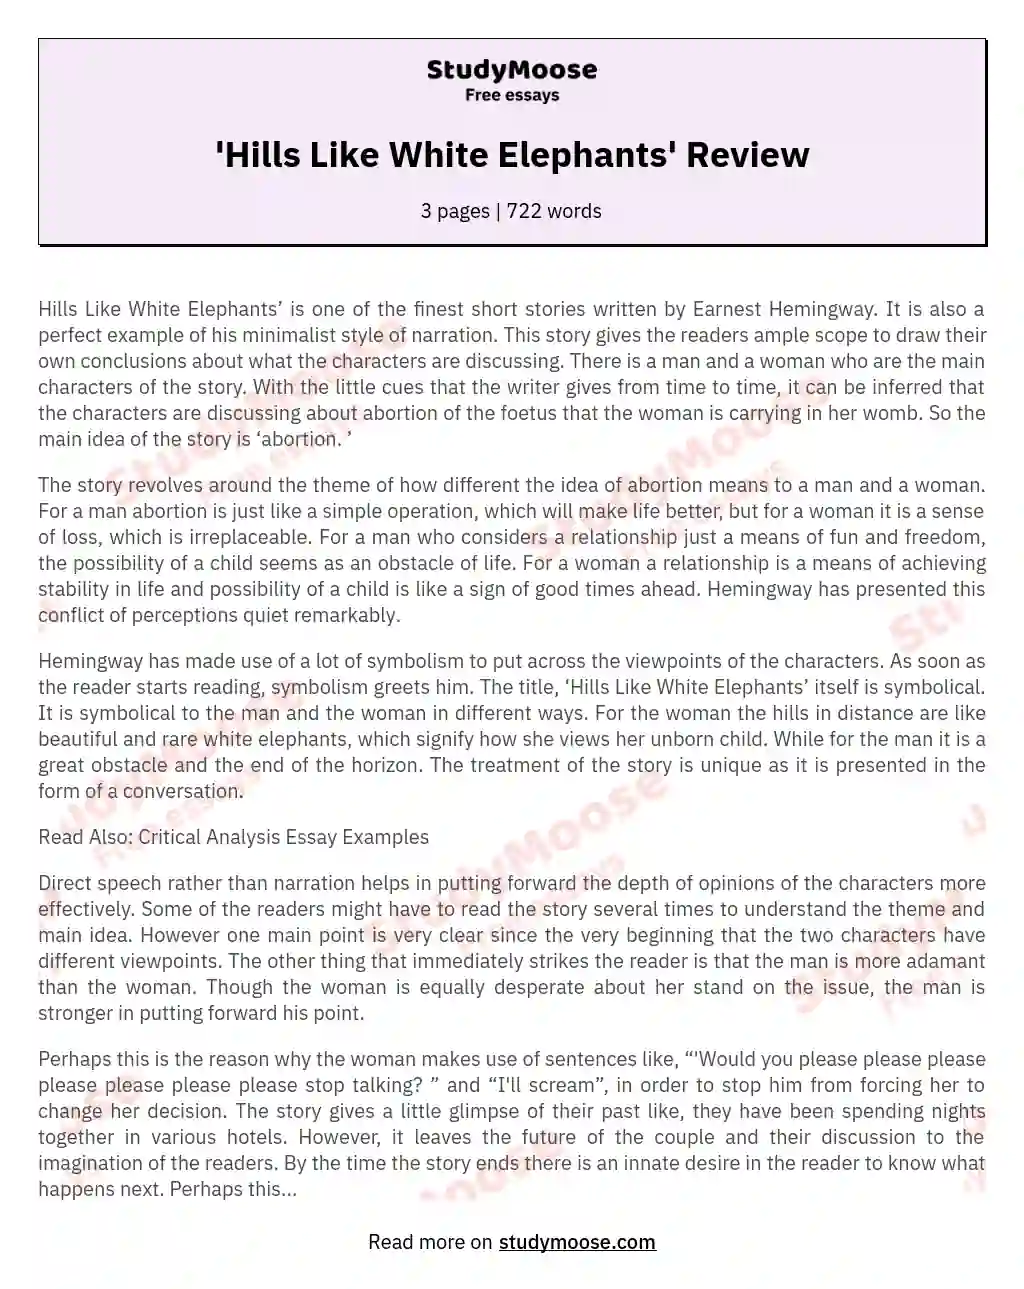 'Hills Like White Elephants' Review essay